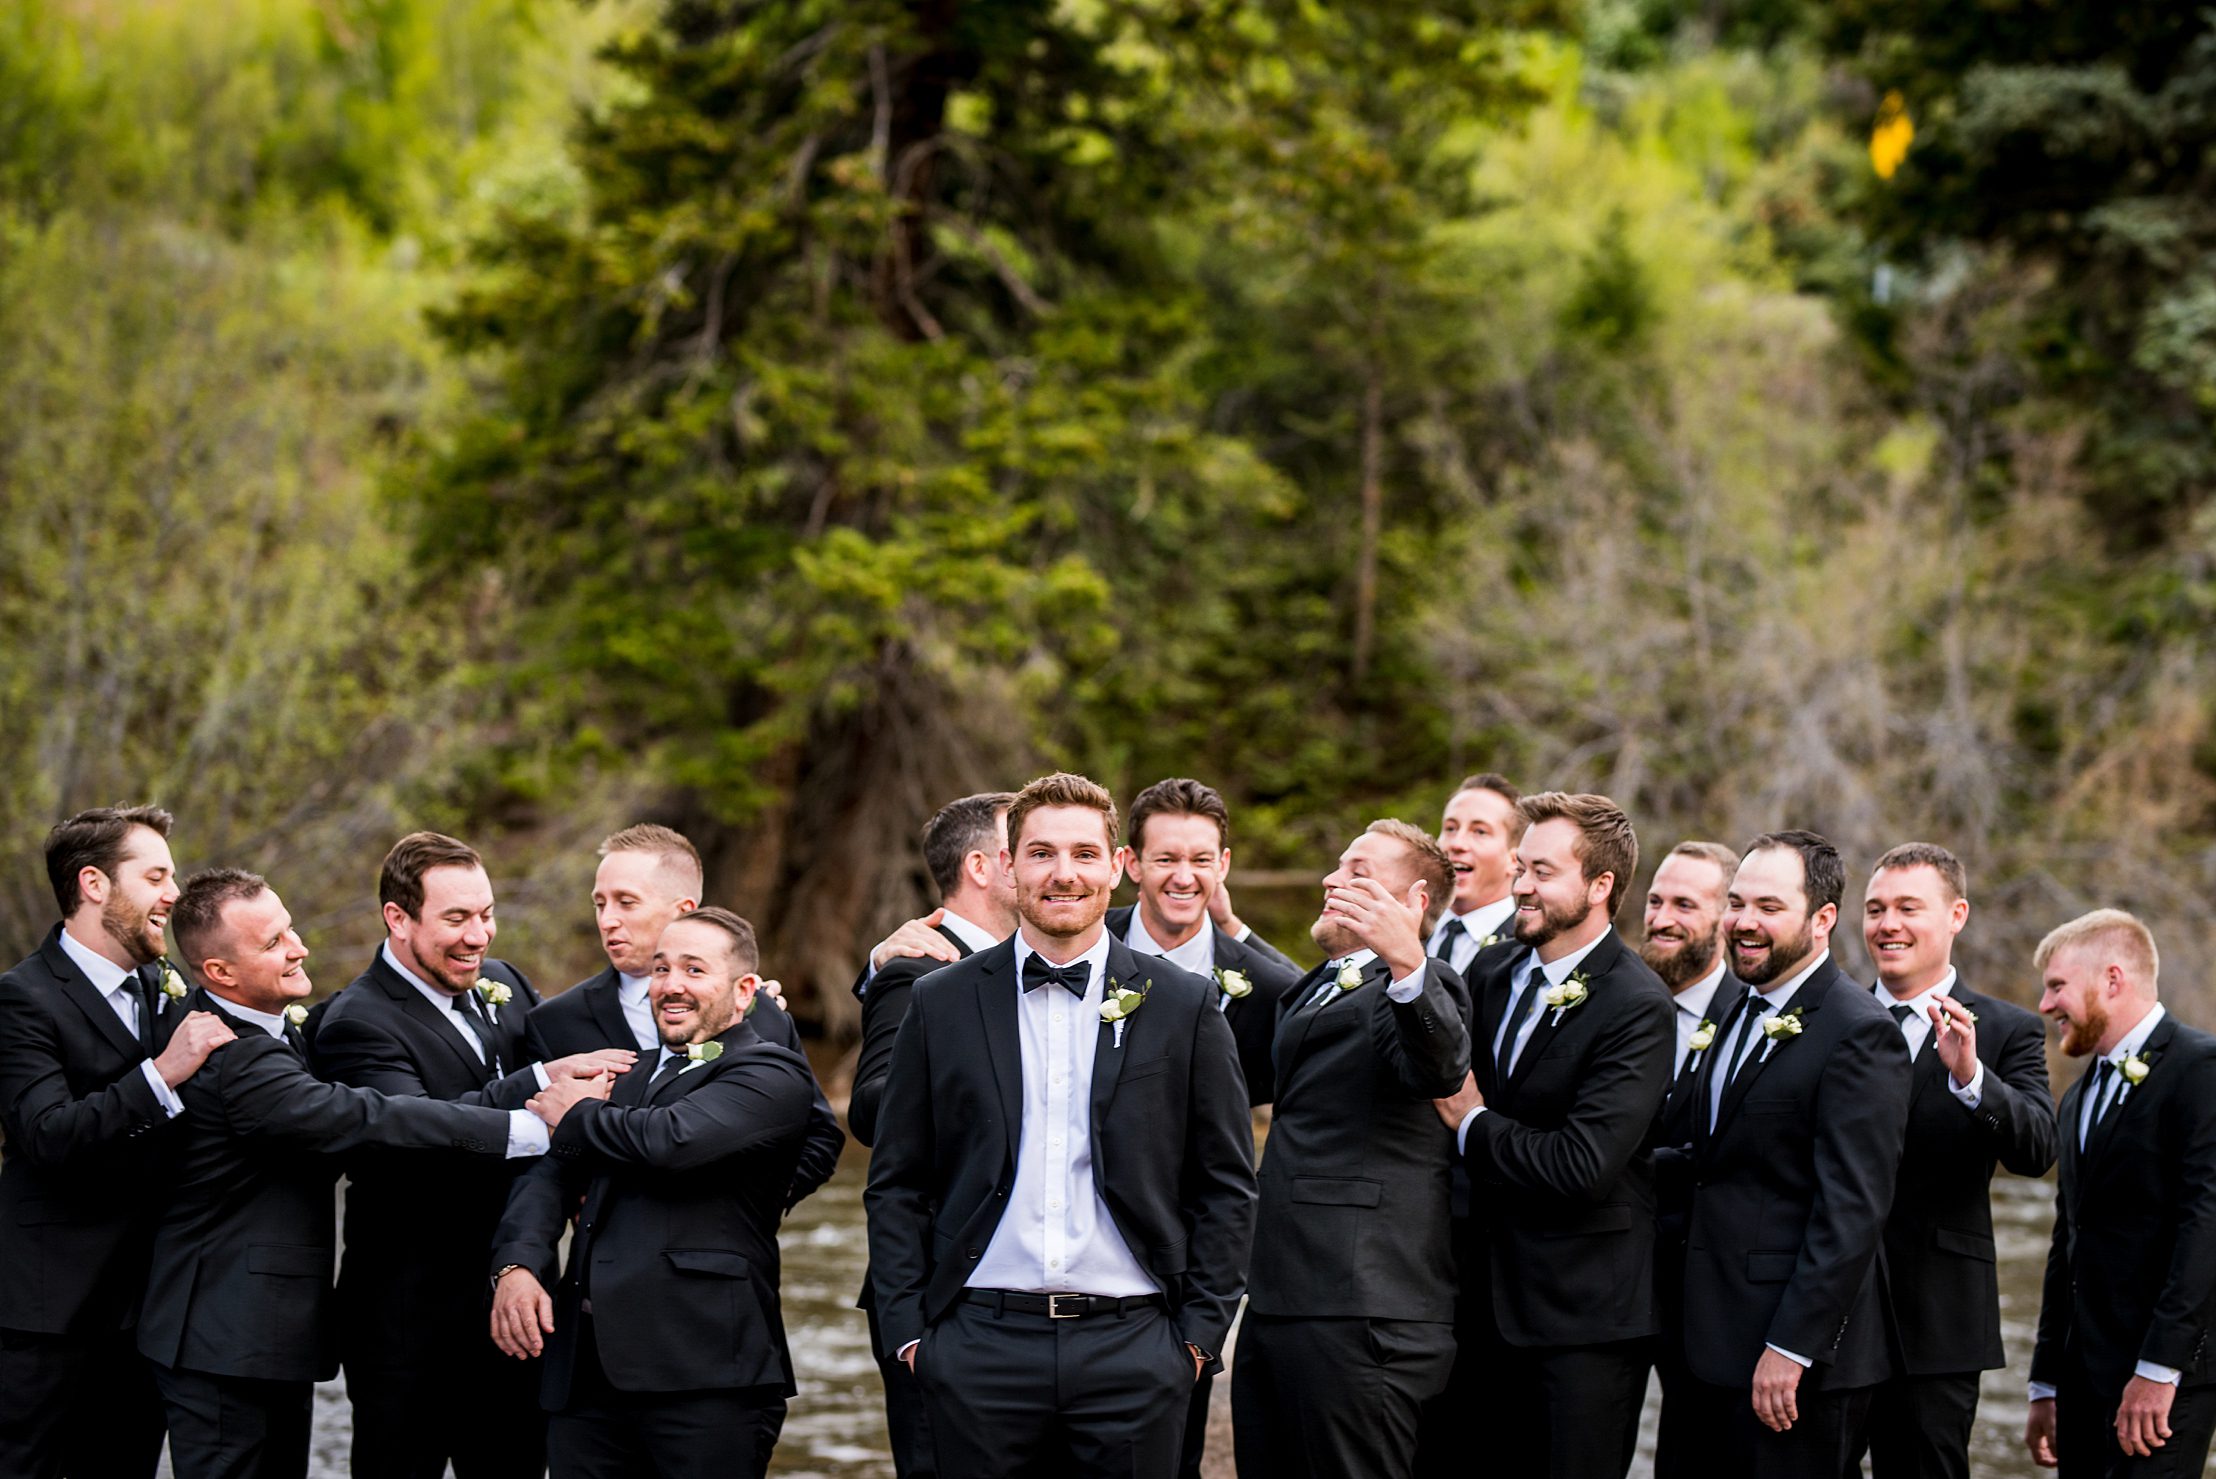 Groomsmen having fun before the wedding ceremony in Colorado